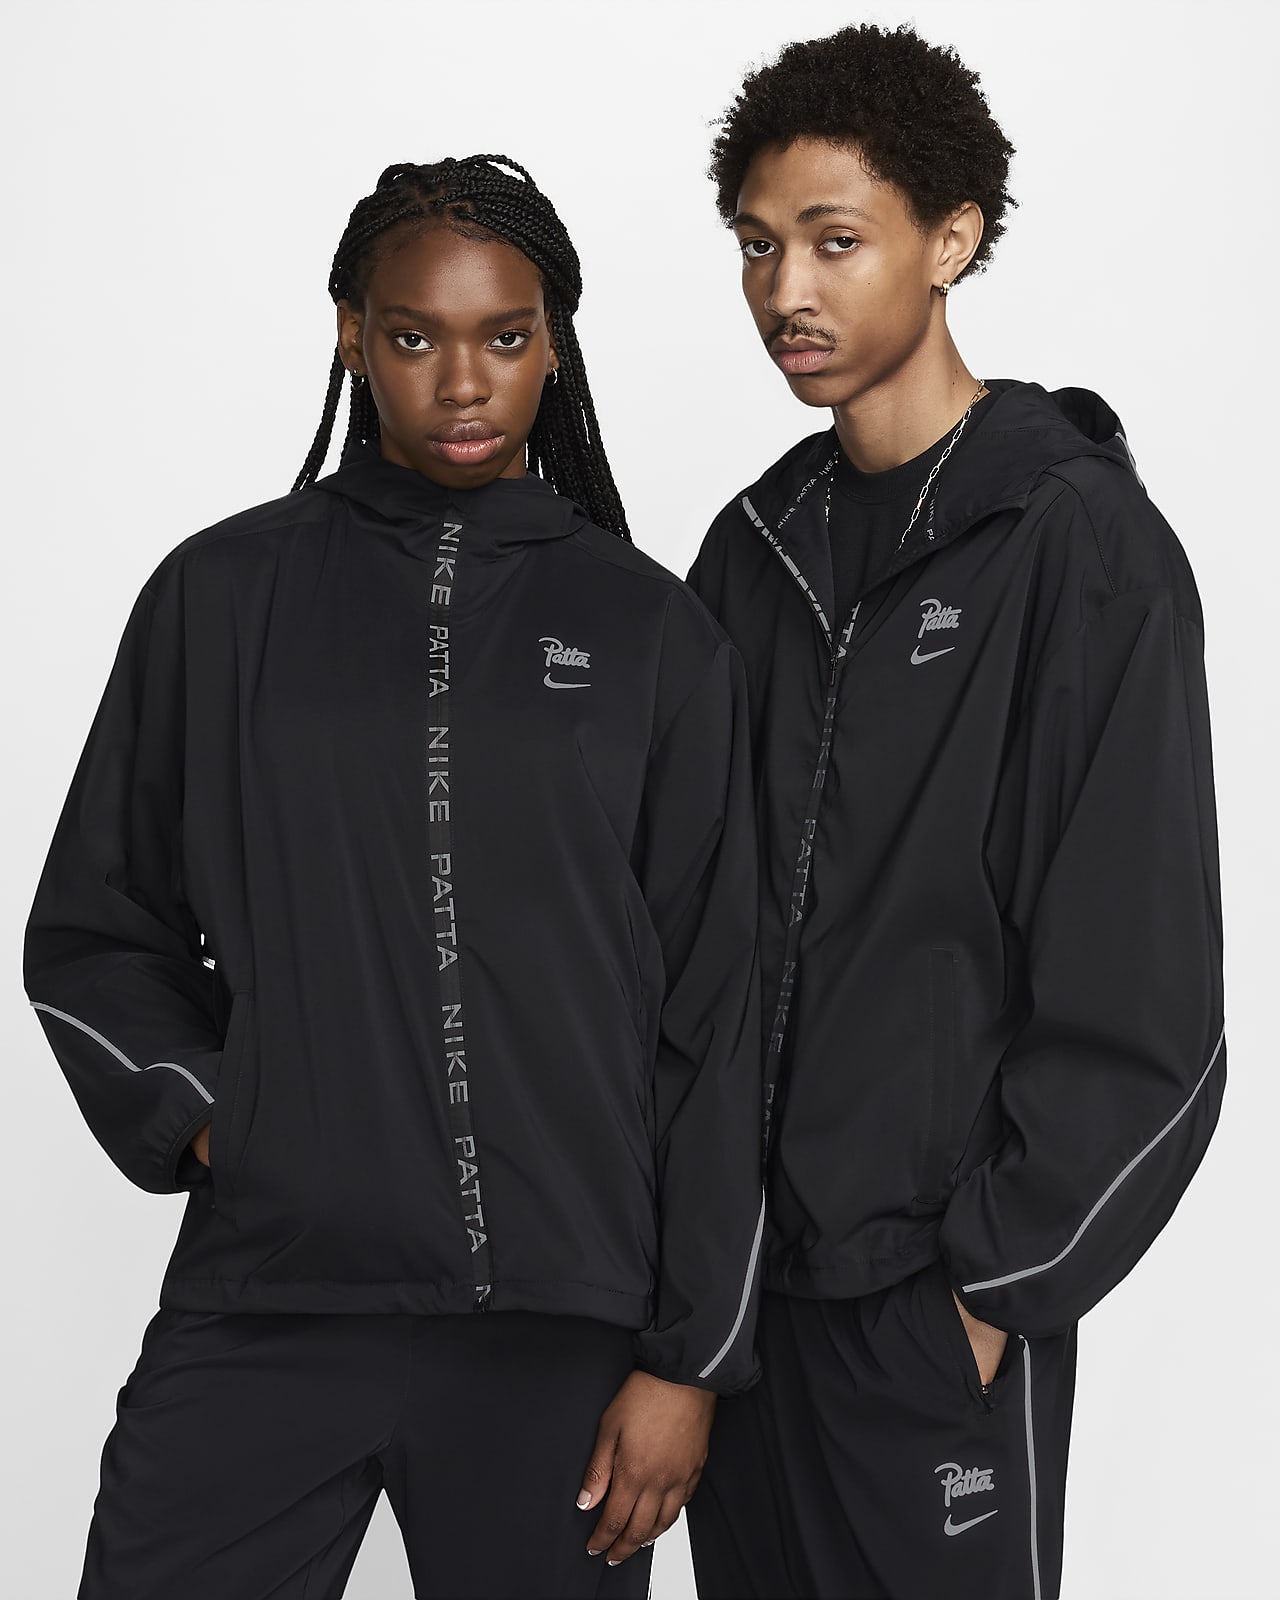 Nike x Patta Running Team Men's Full-Zip Jacket